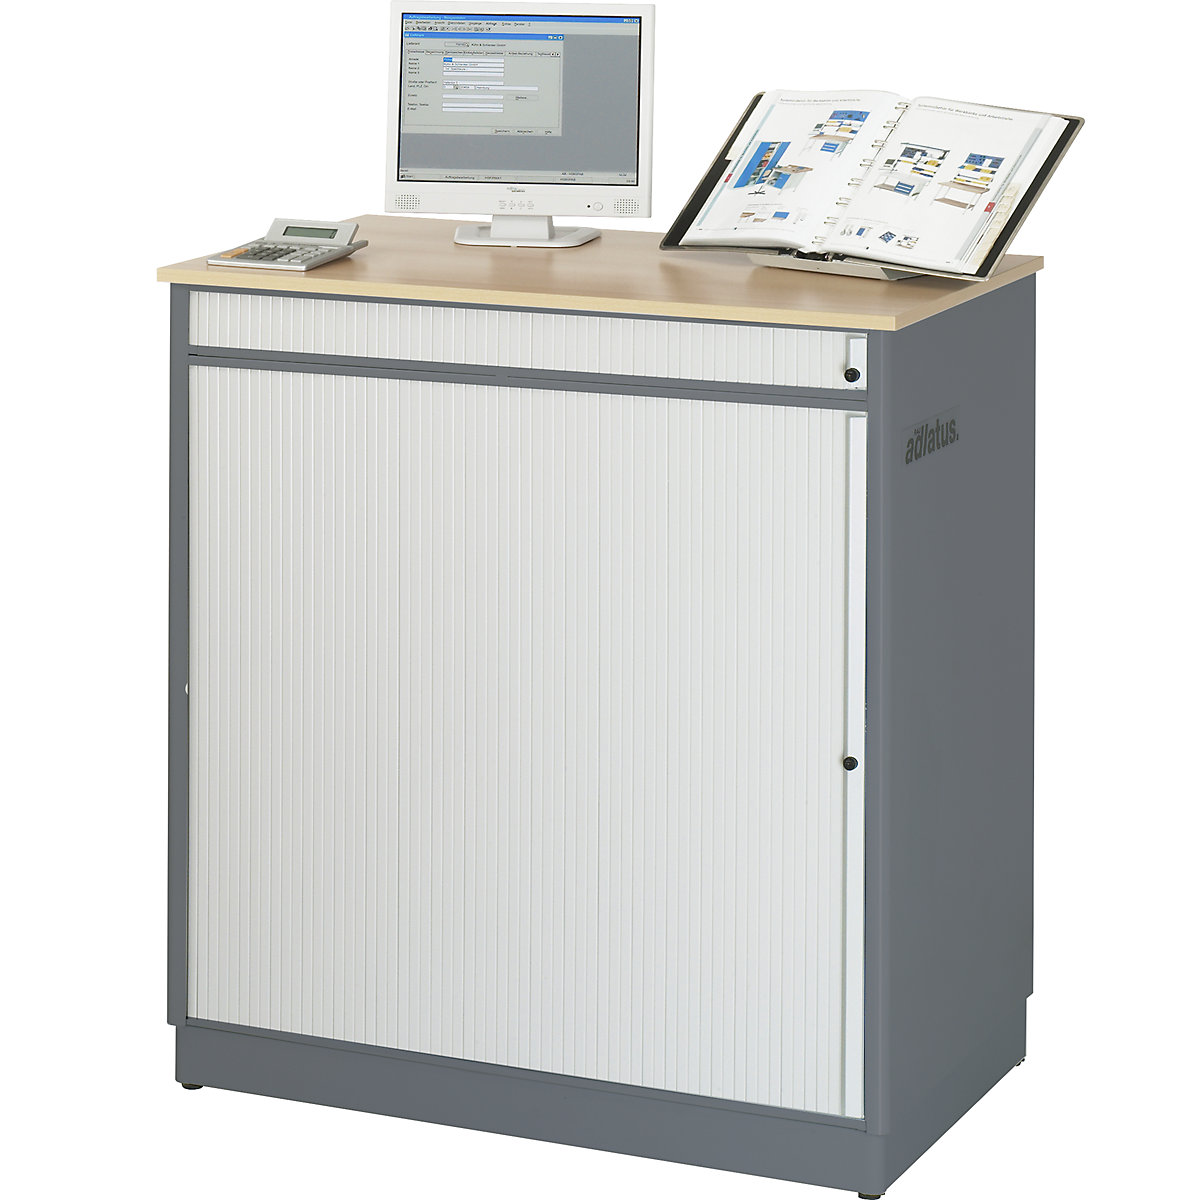 Počítačové pracoviště – RAU, v x š x h 1100 x 1030 x 660 mm, antracitová metalíza / enciánová modrá-13